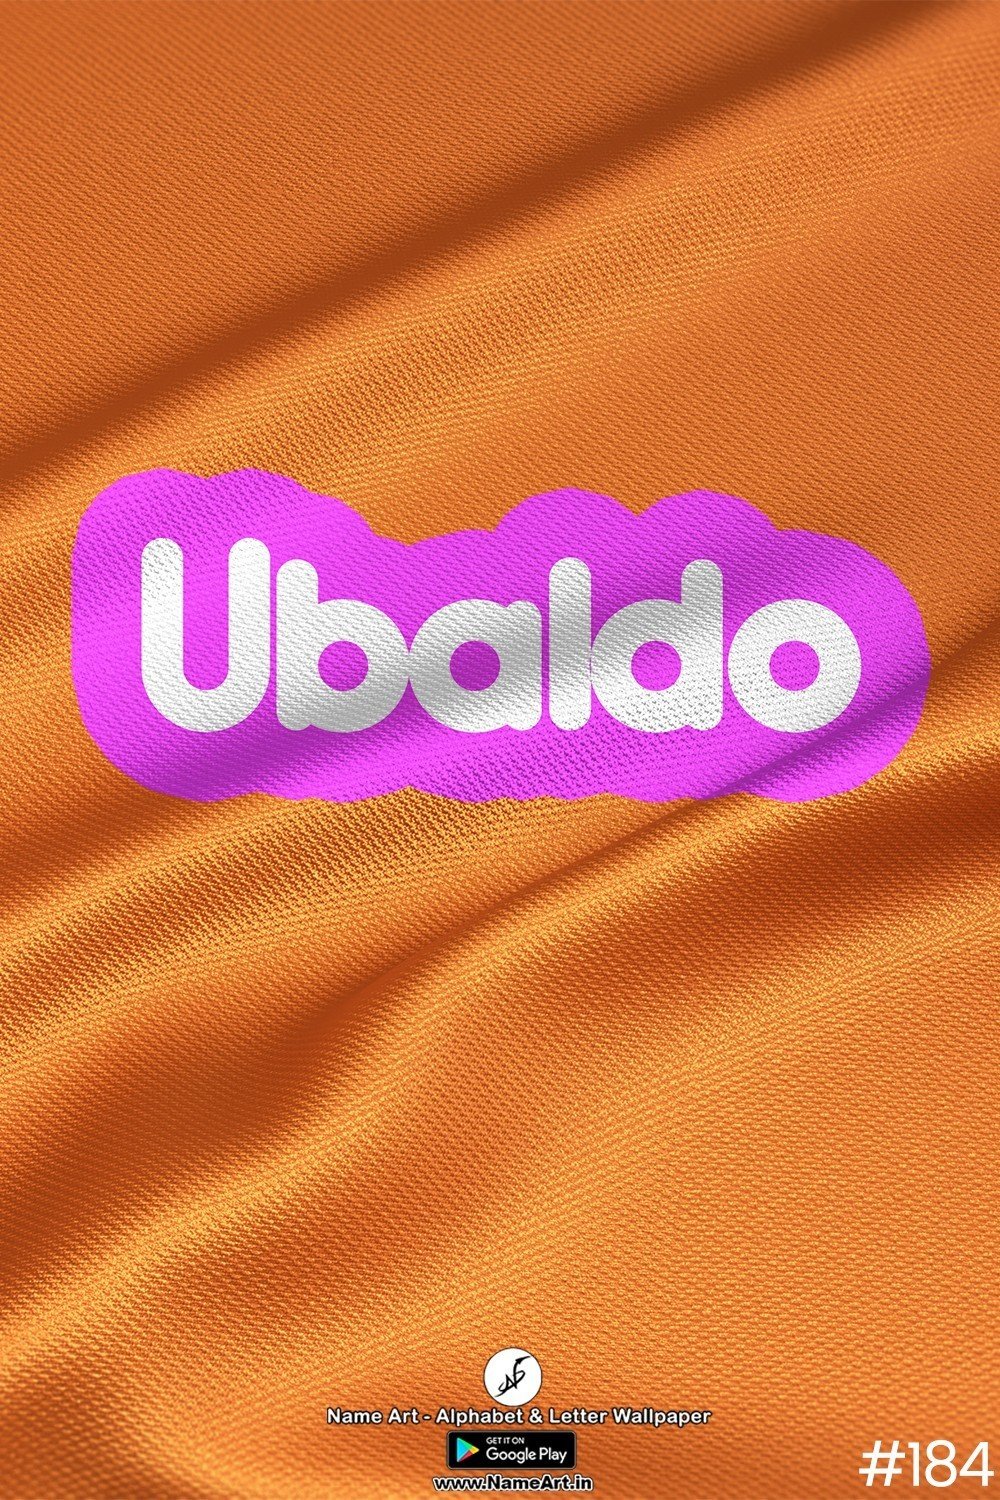 Ubaldo | Whatsapp Status Ubaldo | Happy Birthday Ubaldo !! | New Whatsapp Status Ubaldo Images |